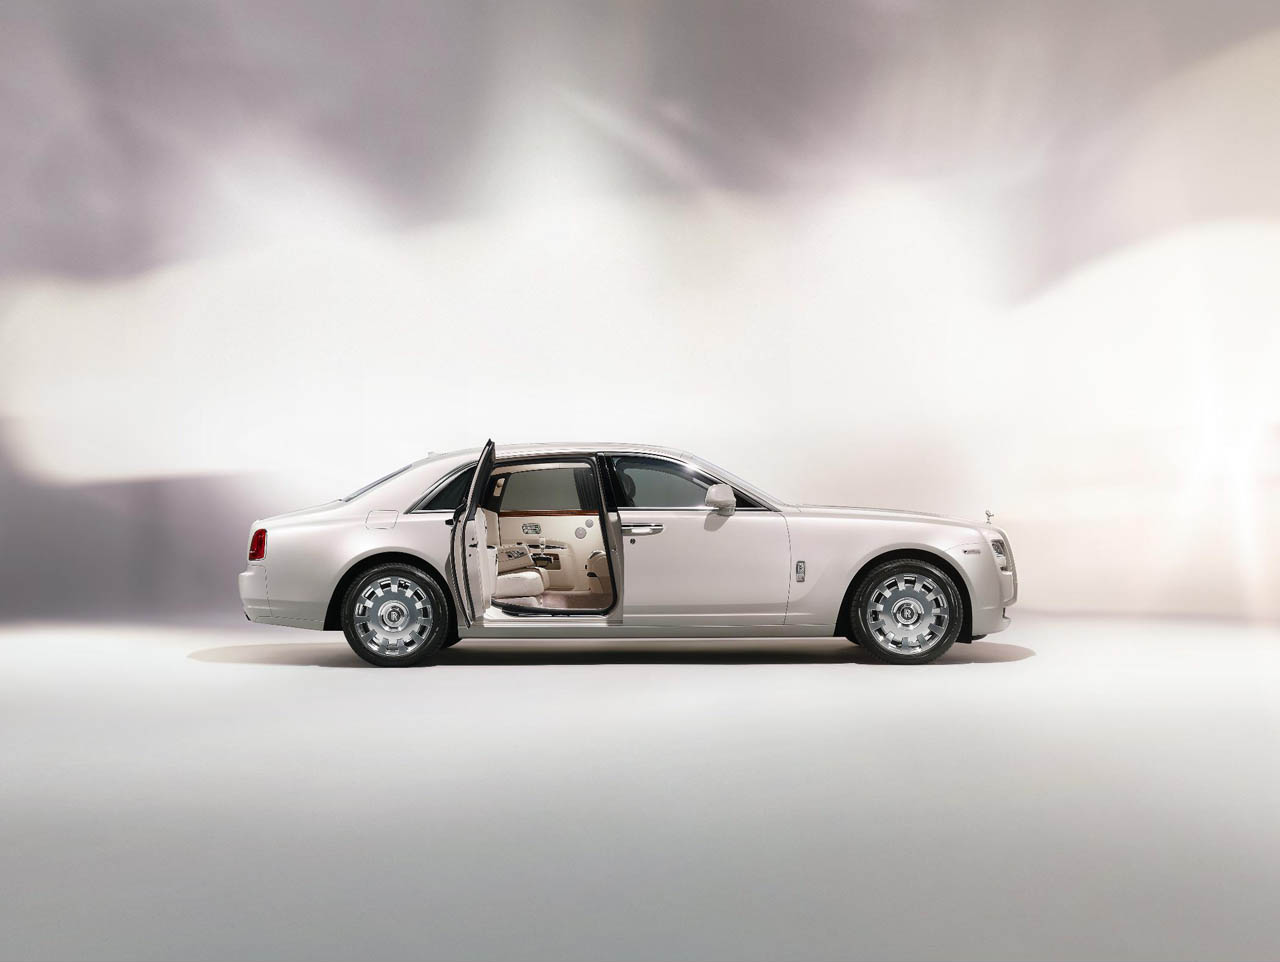 Rolls Royce Ghost Six Senses